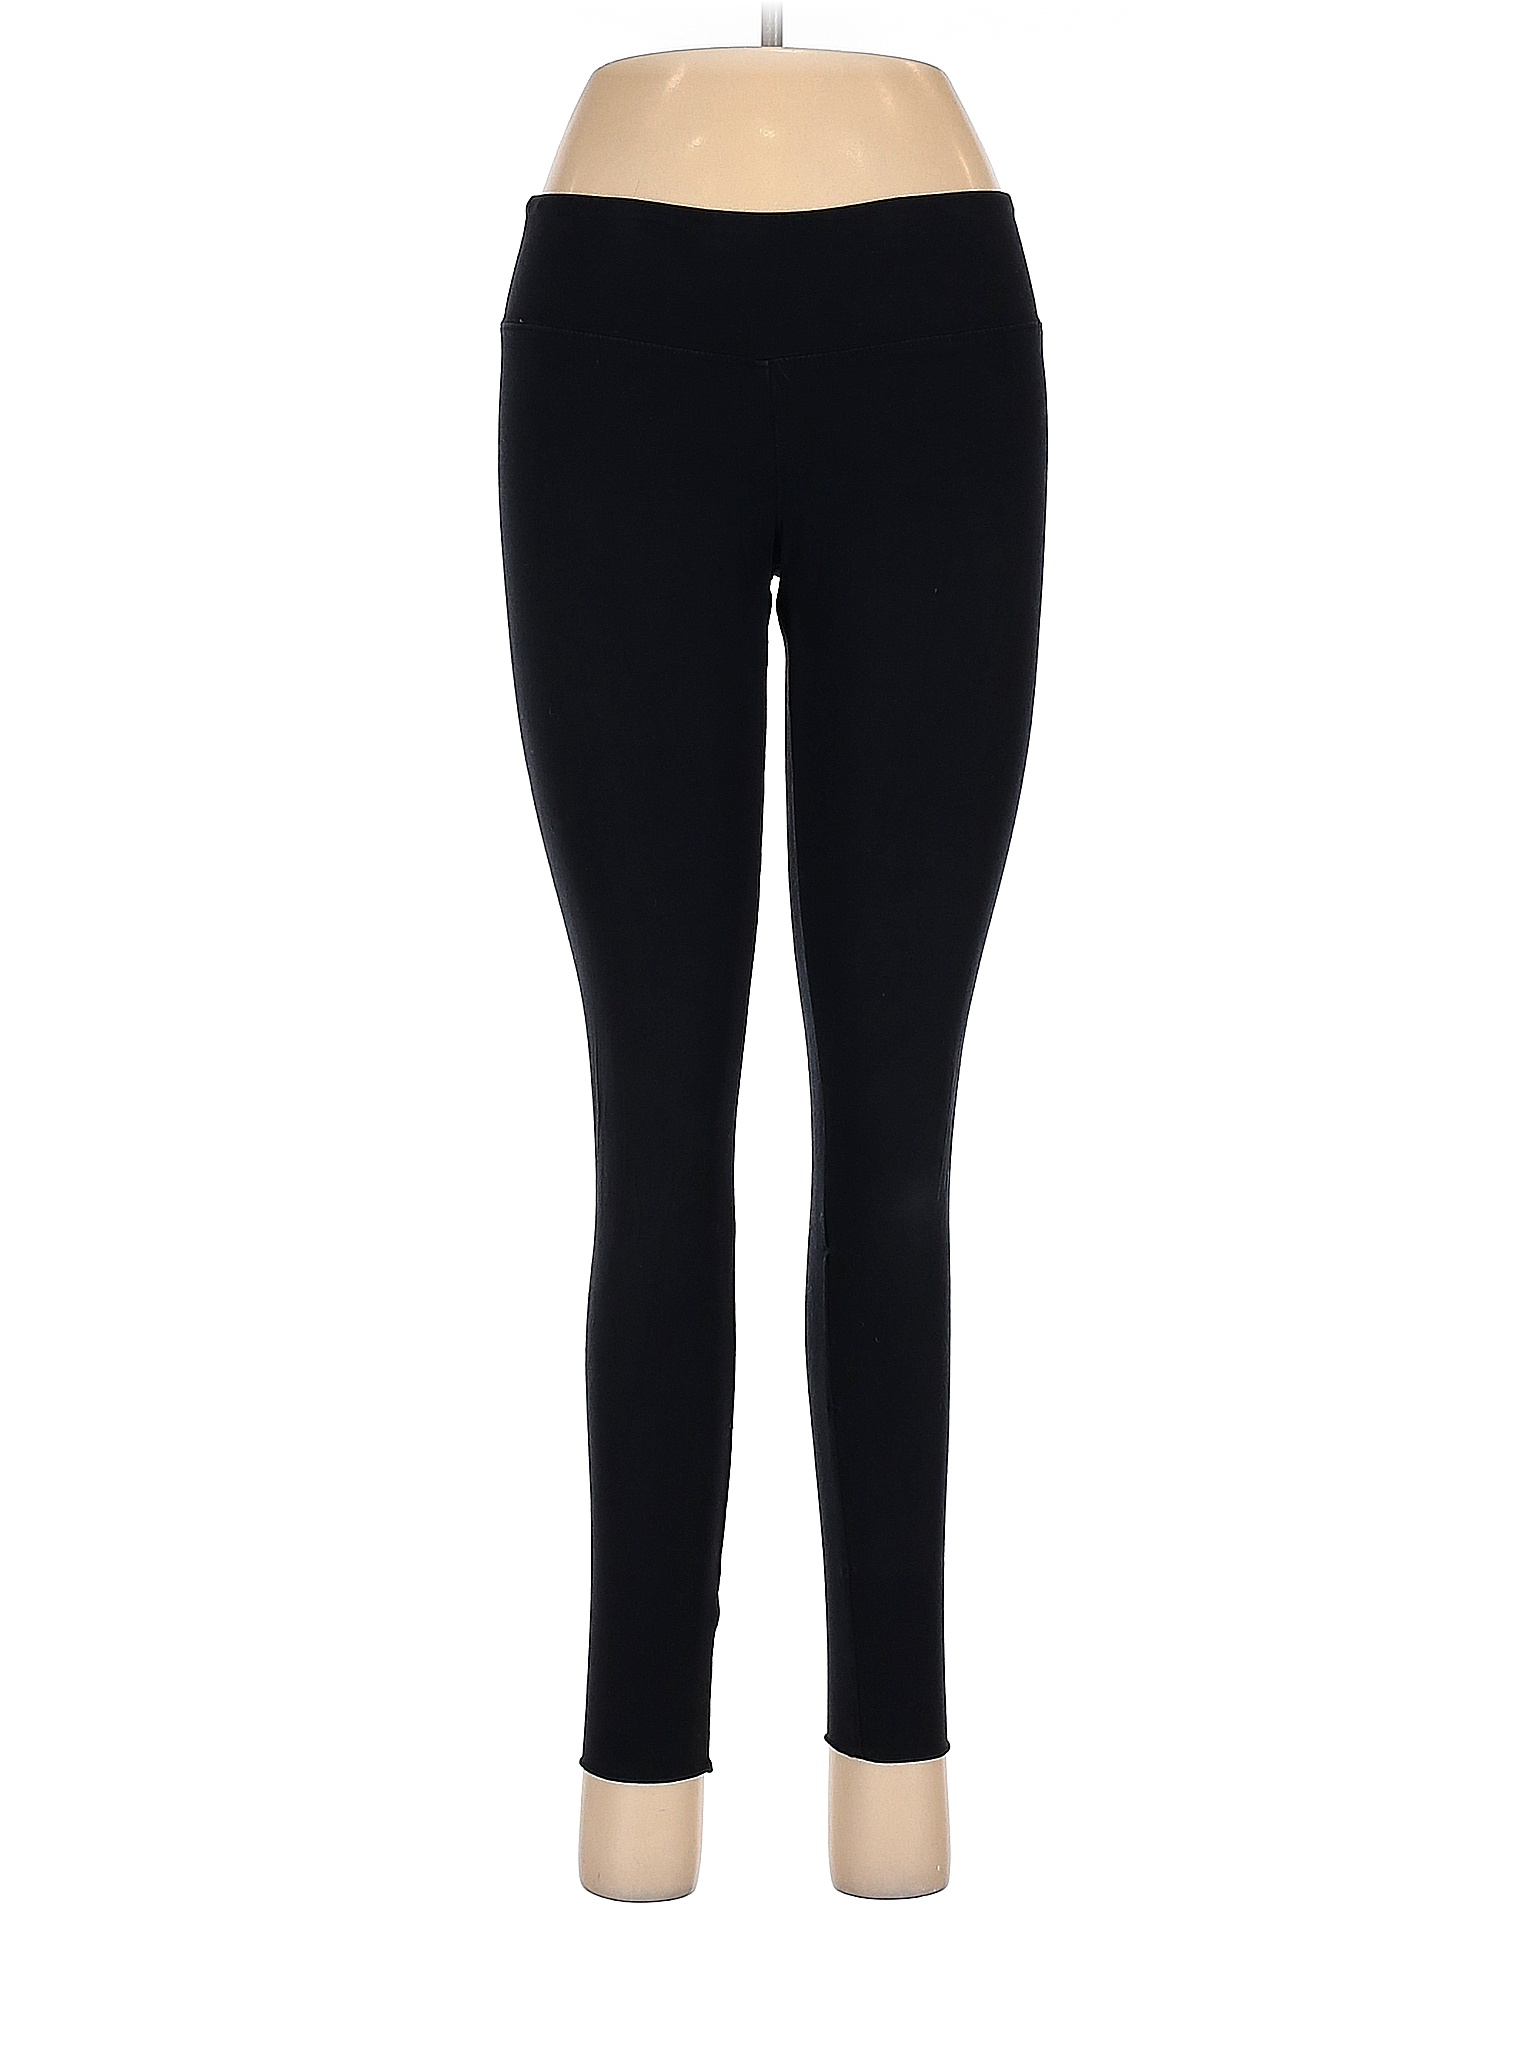 TanJay Women's Black Elastic Waist Pullon Pants Size 12 (K1)